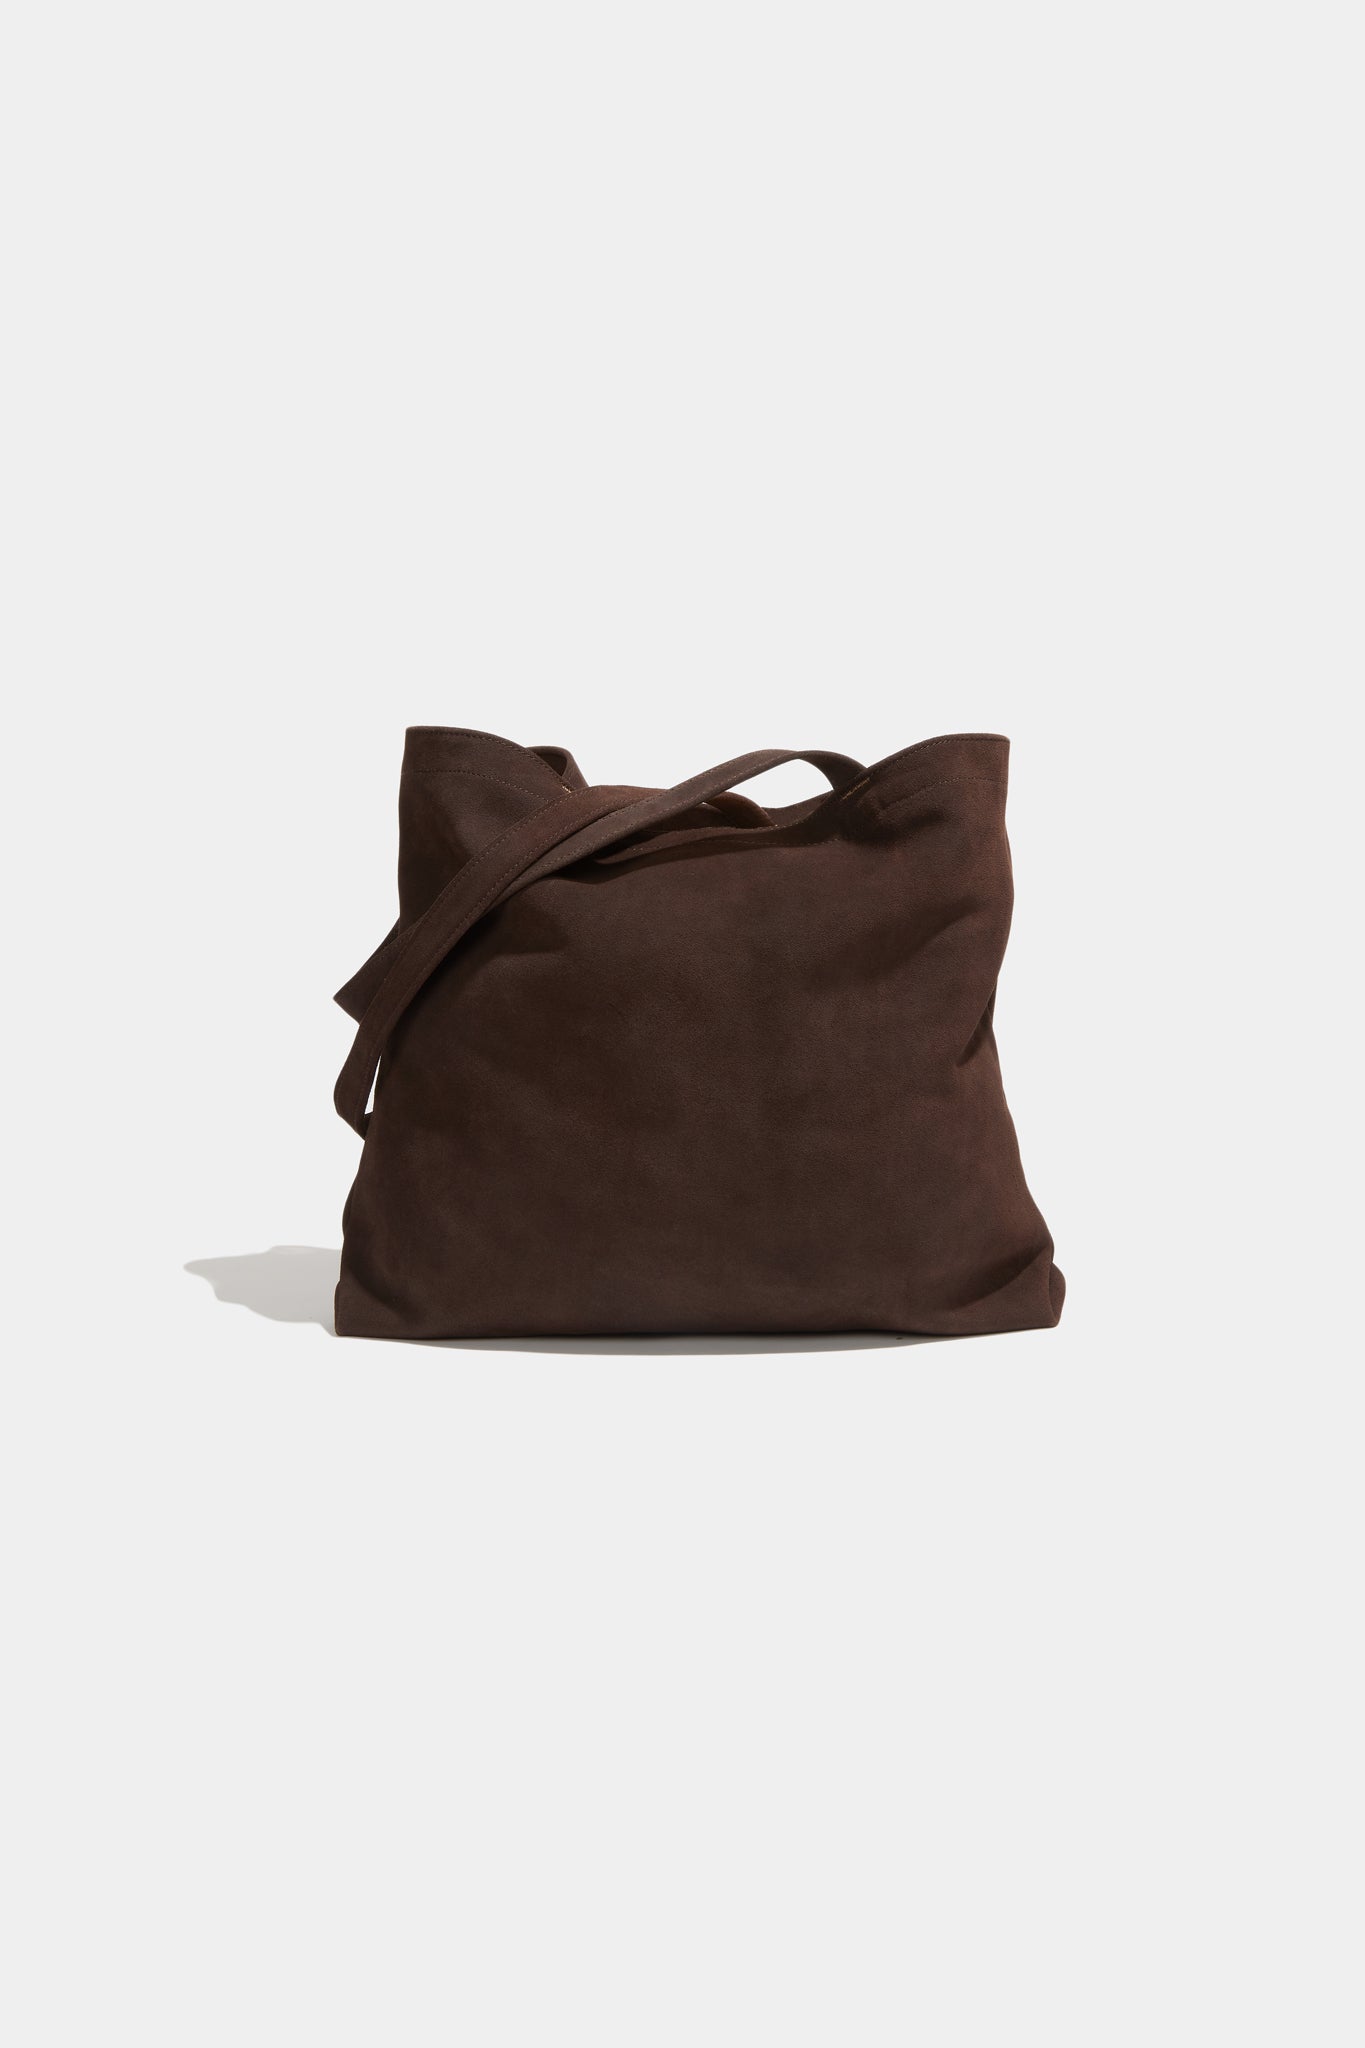 elizabeth and james Suede Bags & Handbags for Women for sale | eBay